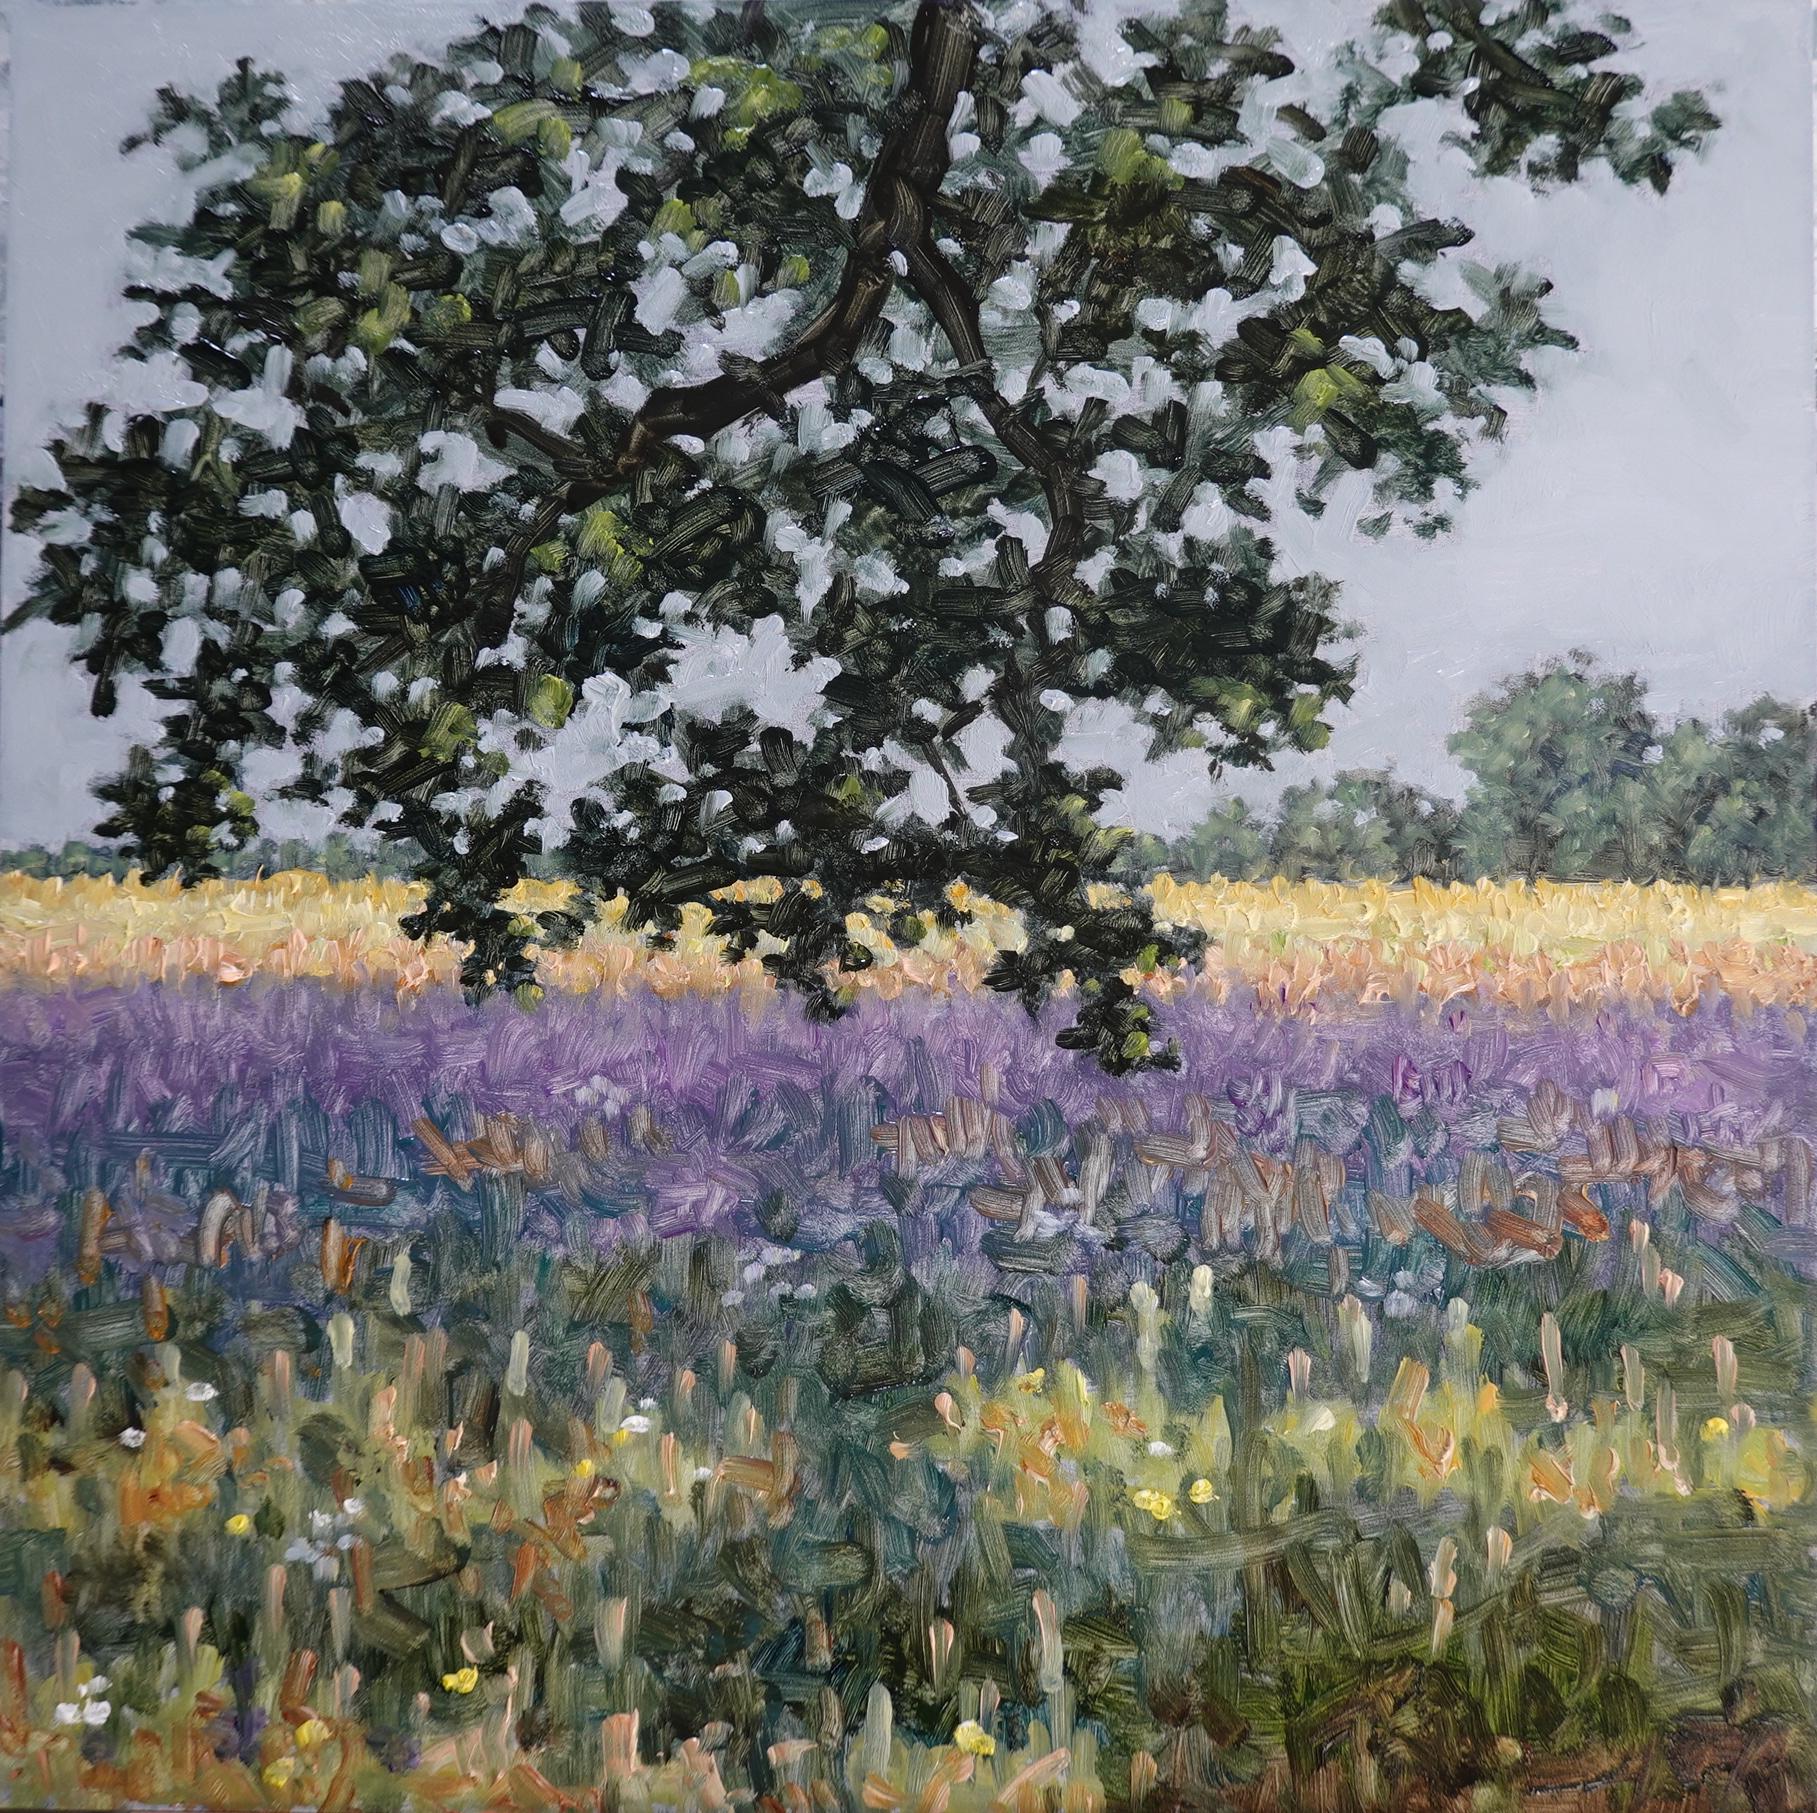 Thomas Sarrantonio Landscape Painting - Field Painting June 30 2022, Green Tree, Golden Grass, Purple Lavender Flowers